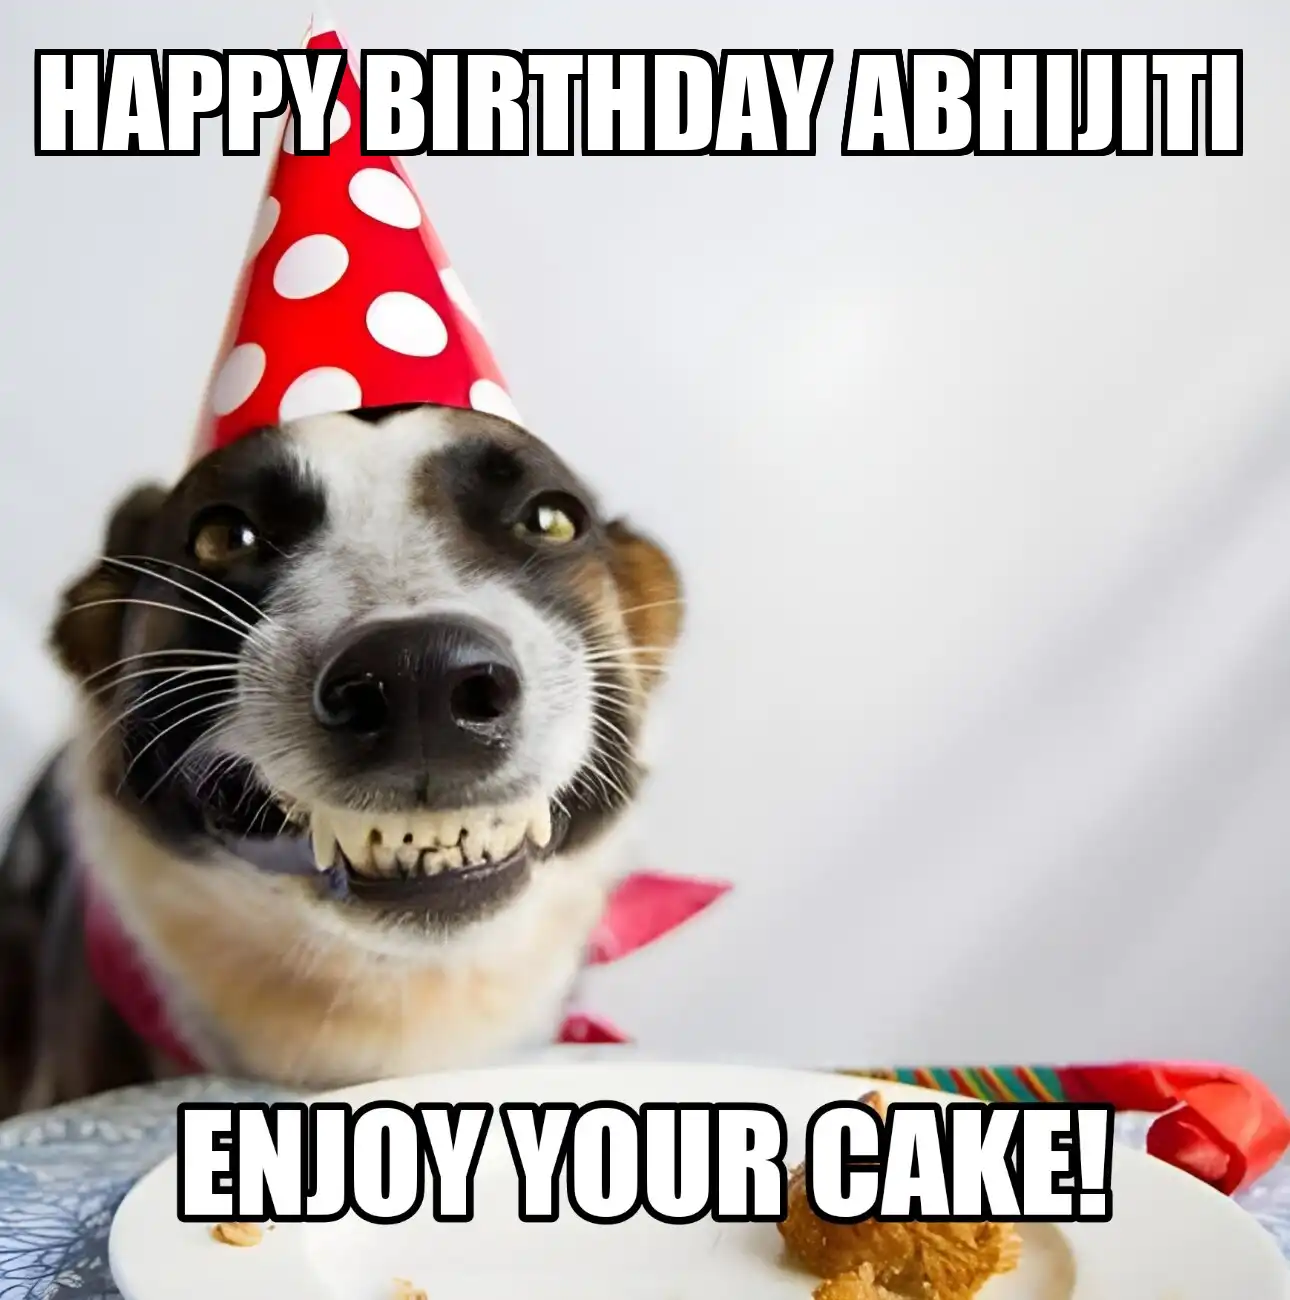 Happy Birthday Abhijiti Enjoy Your Cake Dog Meme